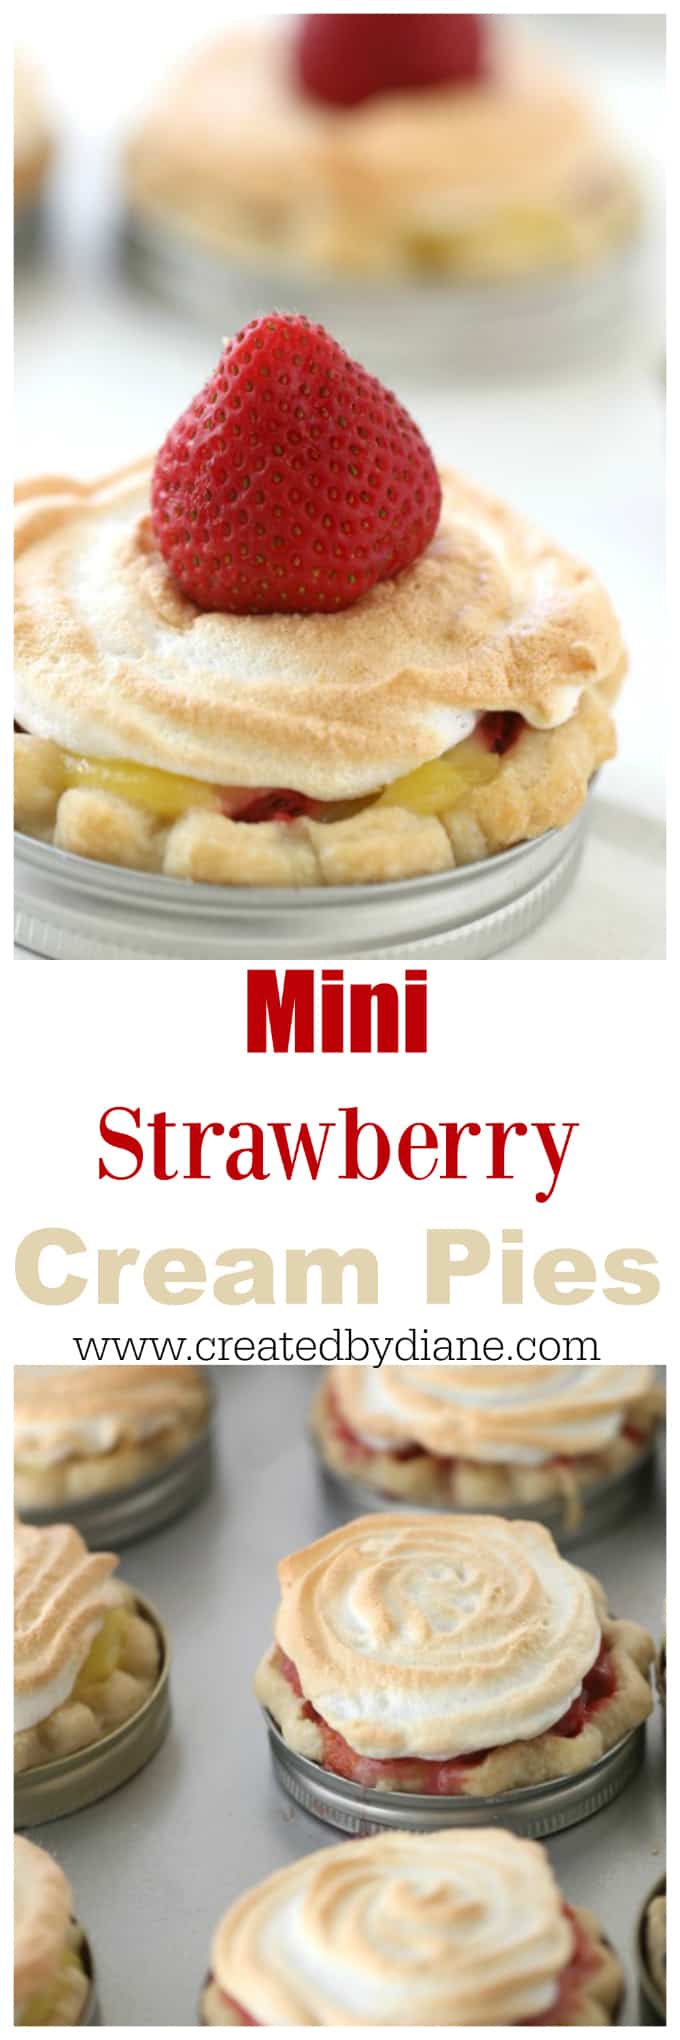 mini strawberry cream pies www.createdbydiane.com